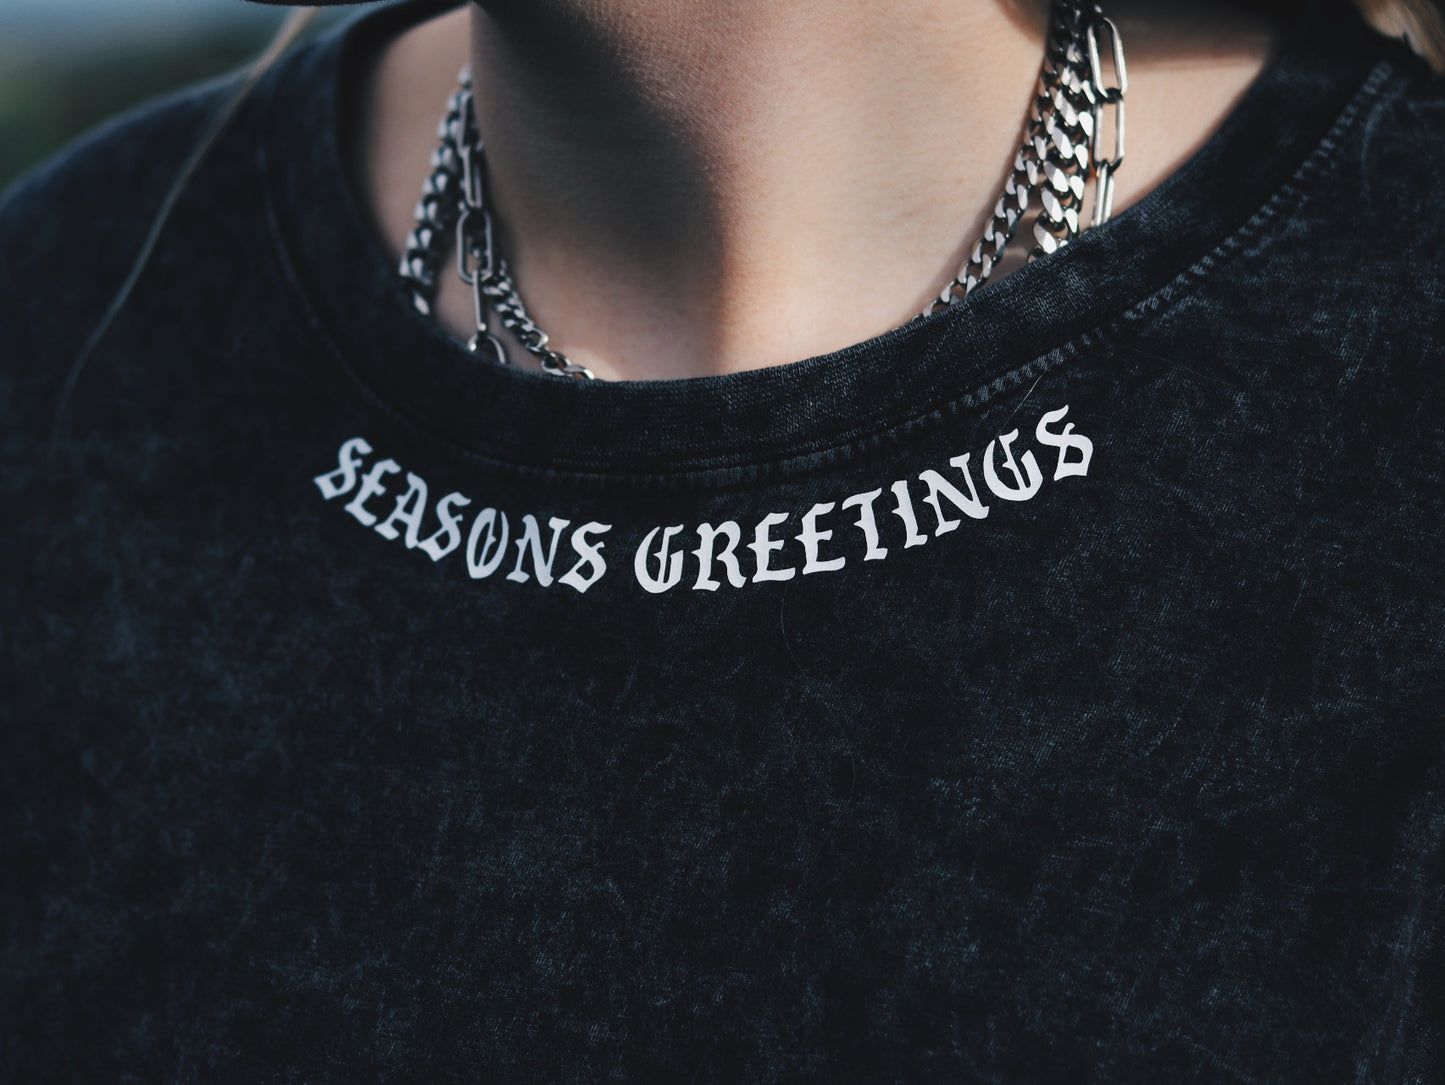 Seasons Greetings - T-Shirt